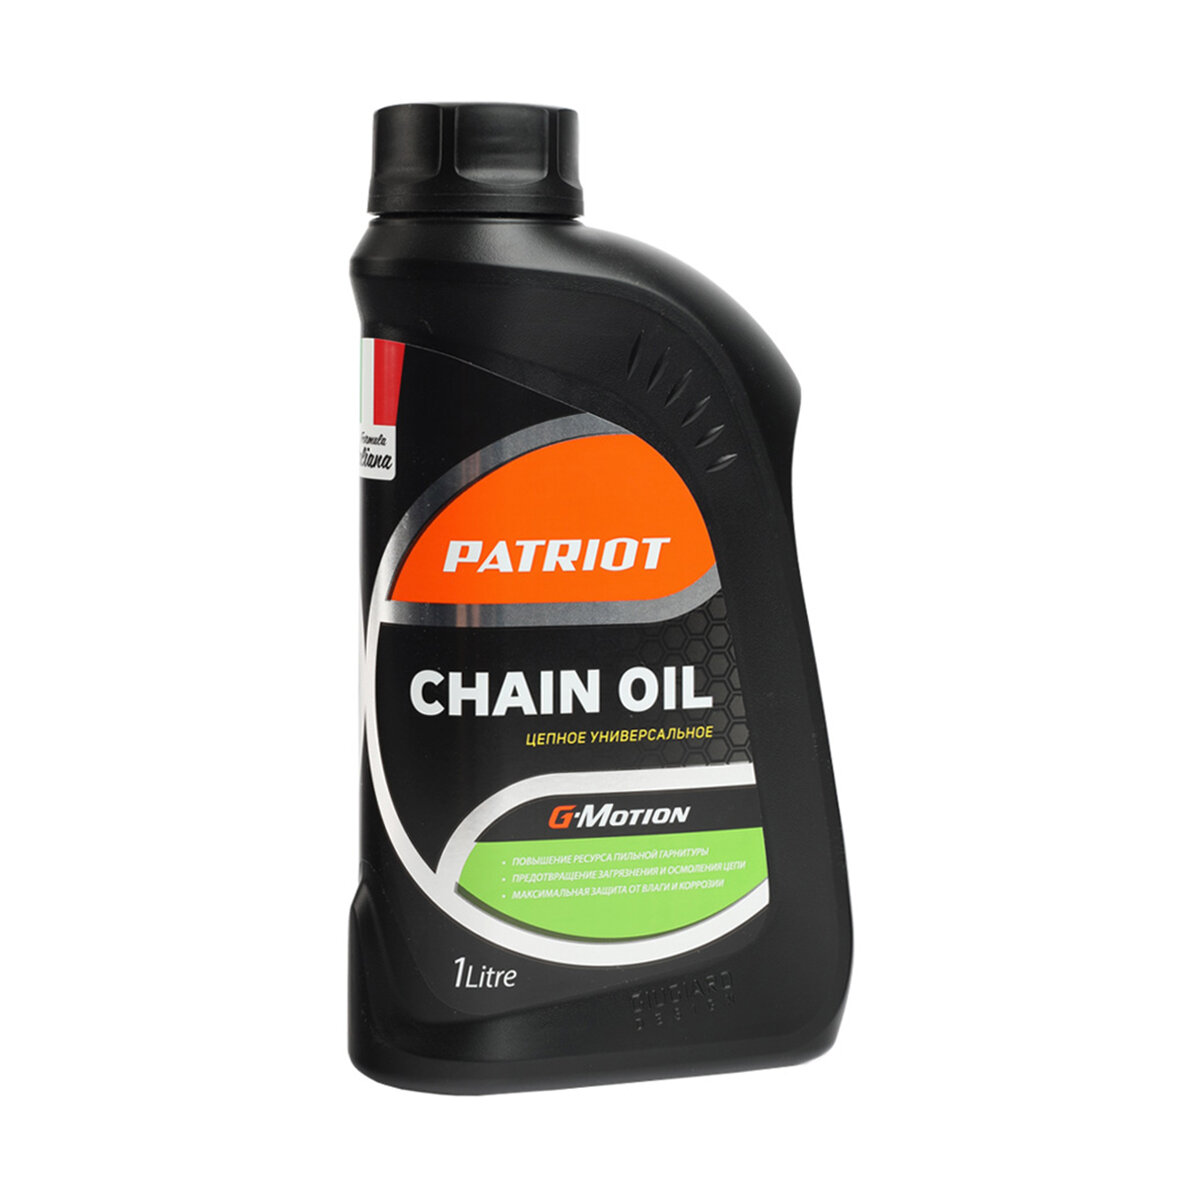   Patriot G-Motion Chain Oil, 1 